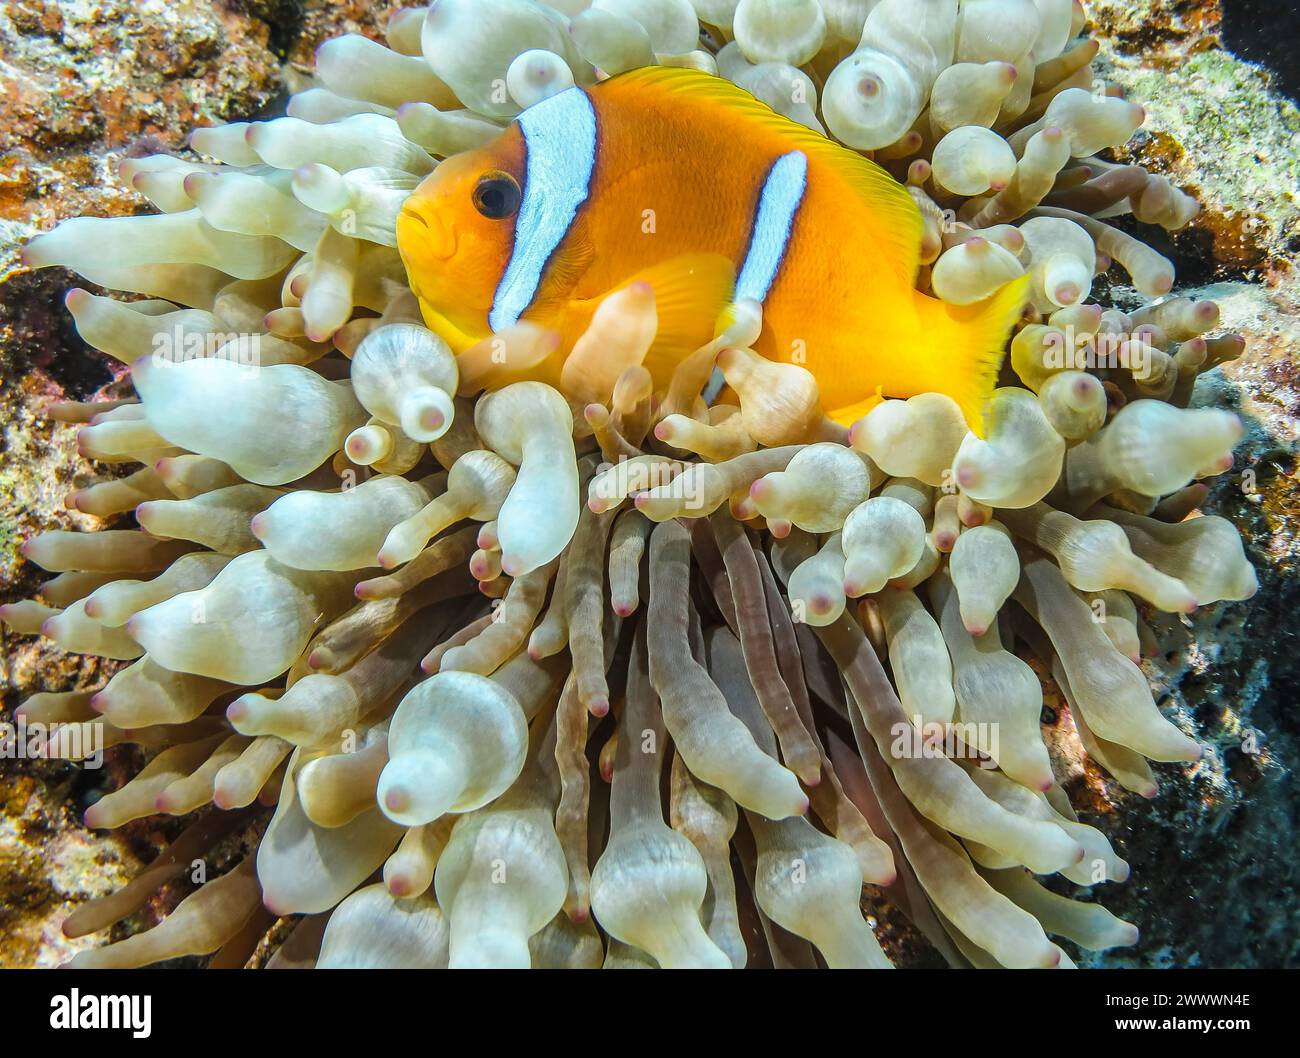 Blasenanemone (Entacmaea quadricolor), Rotmeer-Anemonenfisch (Amphiprion bicinctus), Tauchplatz Siyul Kebir Reef, Rotes Meer, Ägypten Banque D'Images